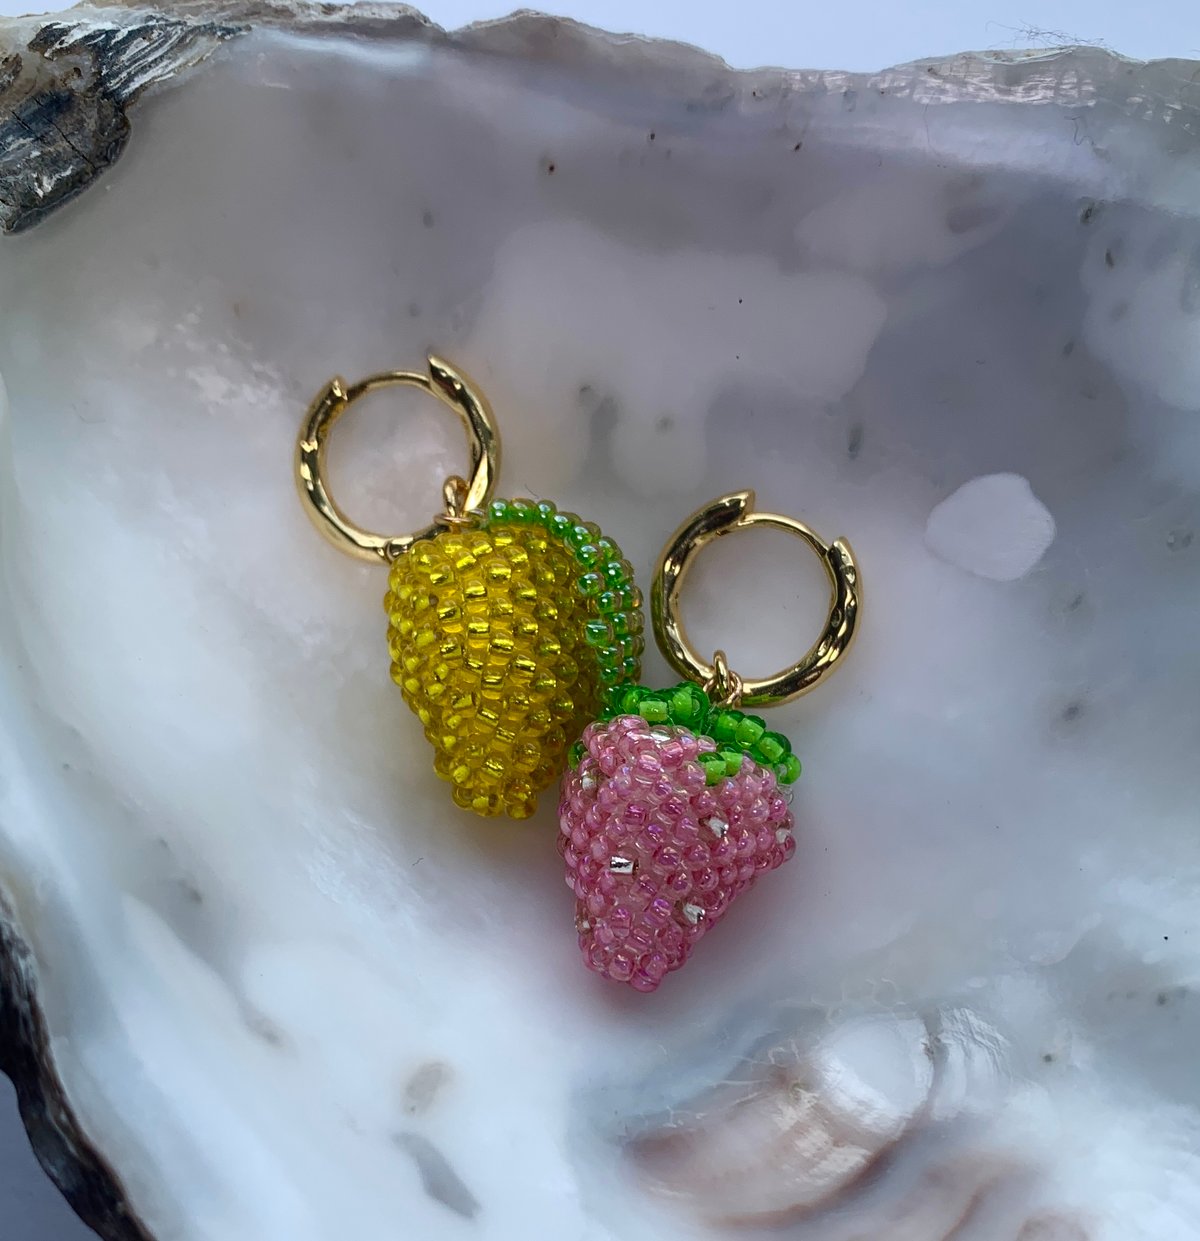 Image of Beaded fruits earrings